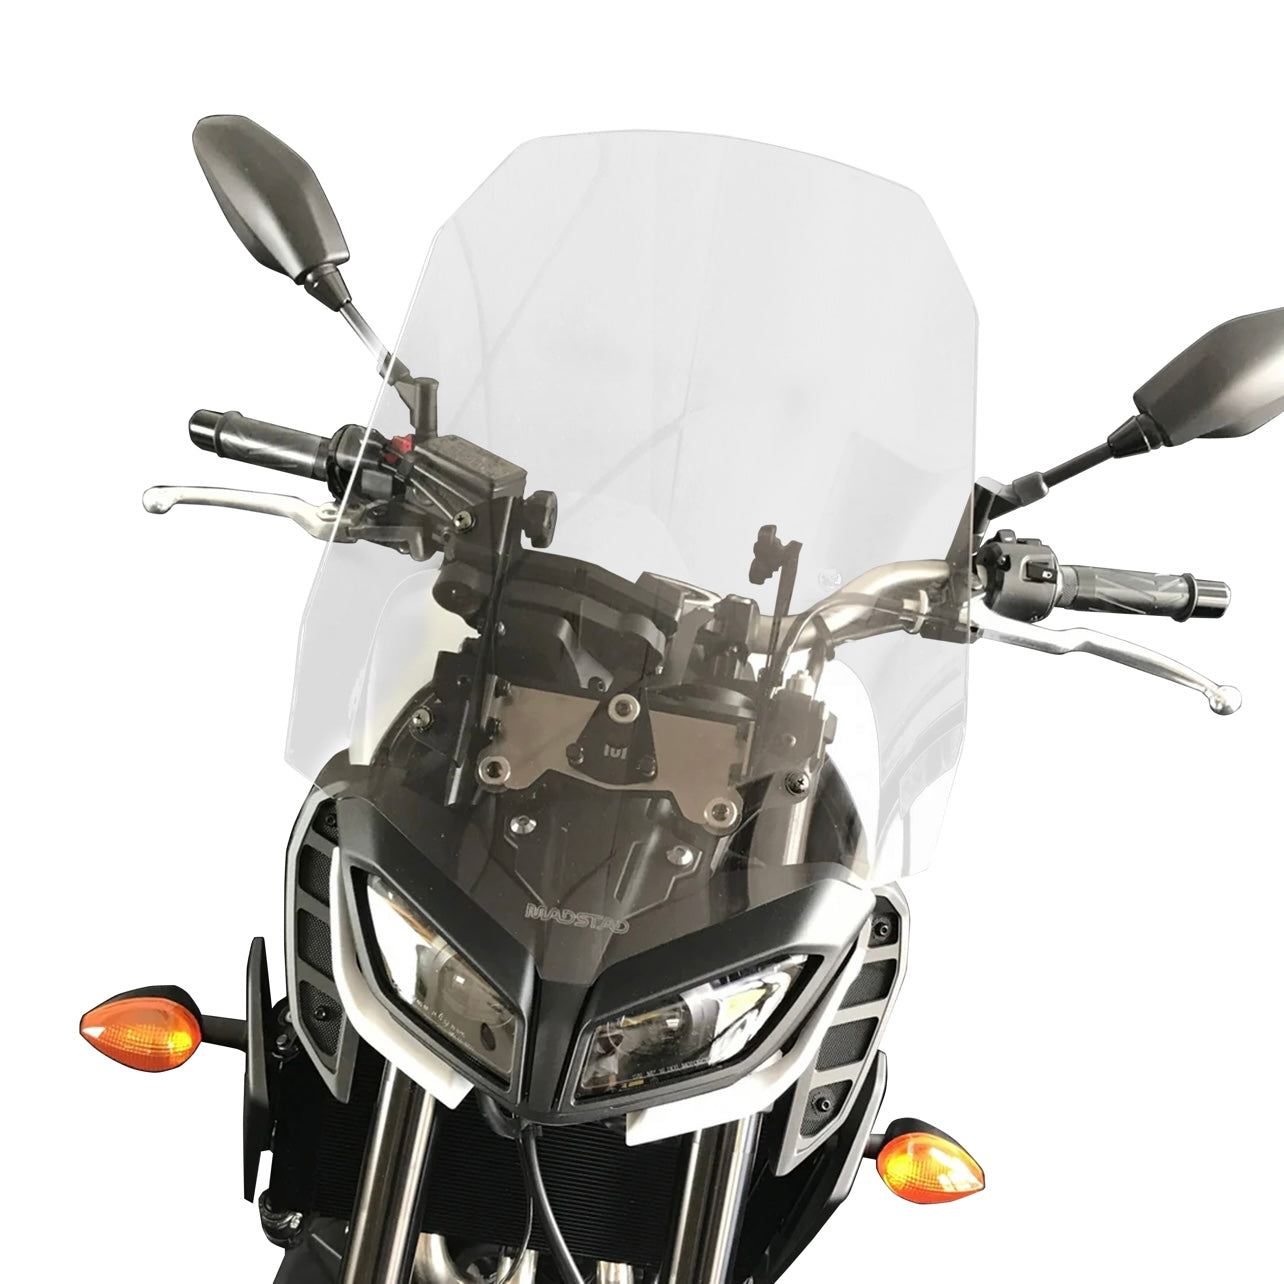 Adjustable Windshield System for Yamaha FZ-09/MT-09 (2017 - 2020)